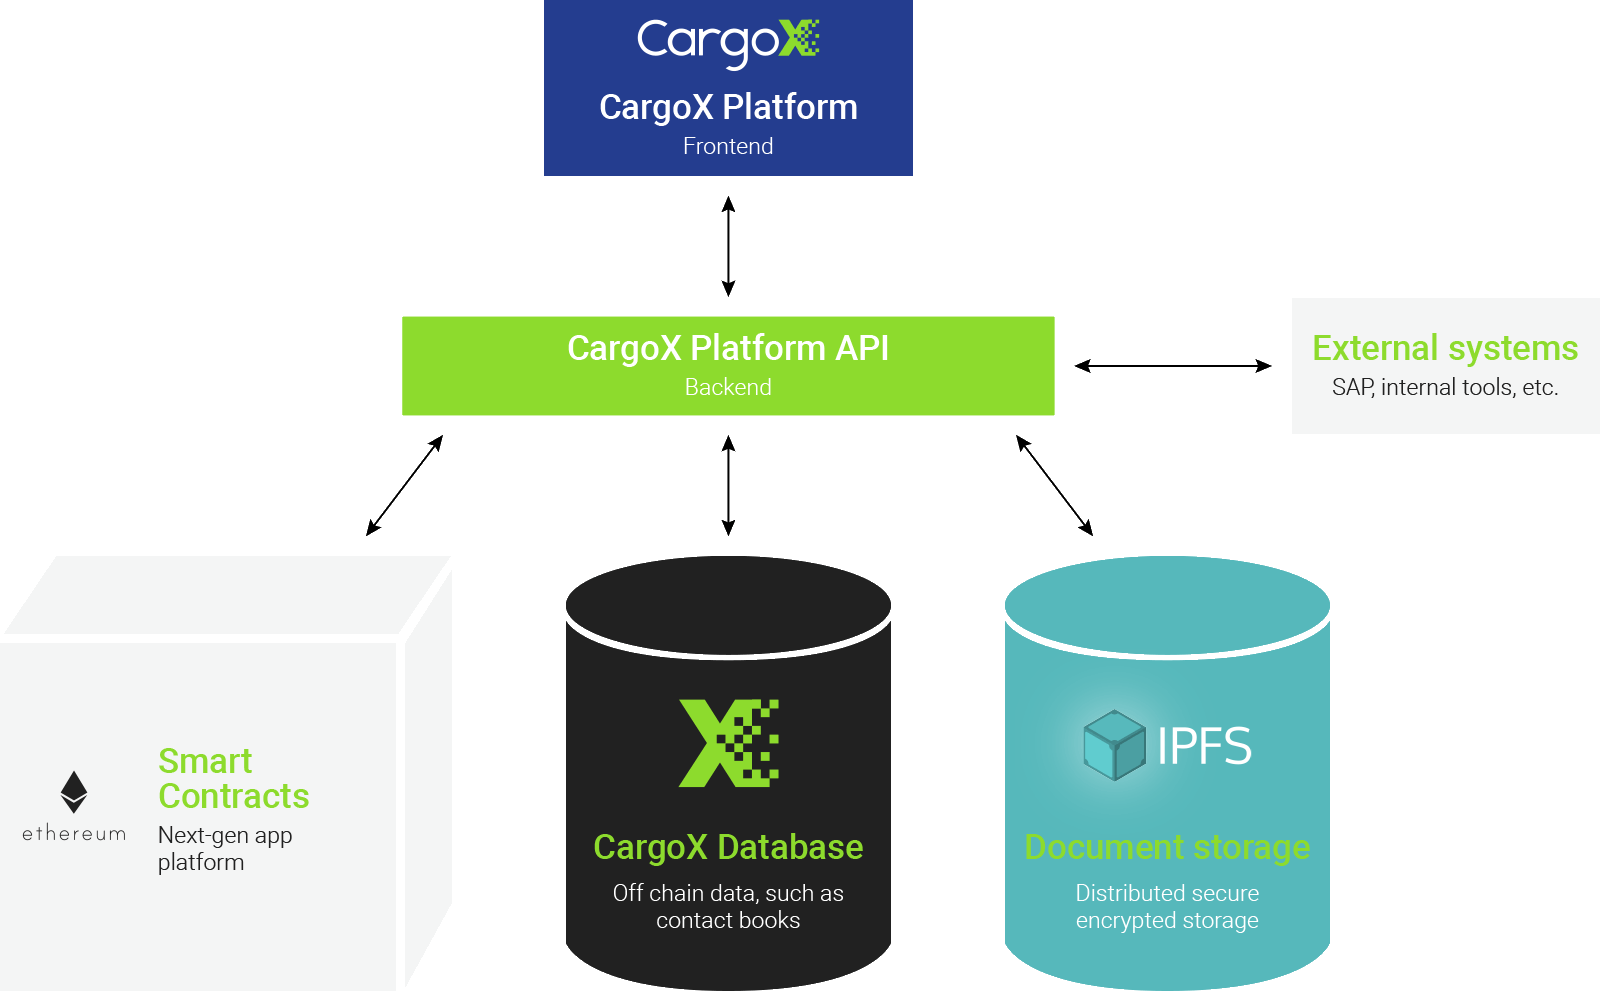 _images/cargox-platform-communication-flow.gif